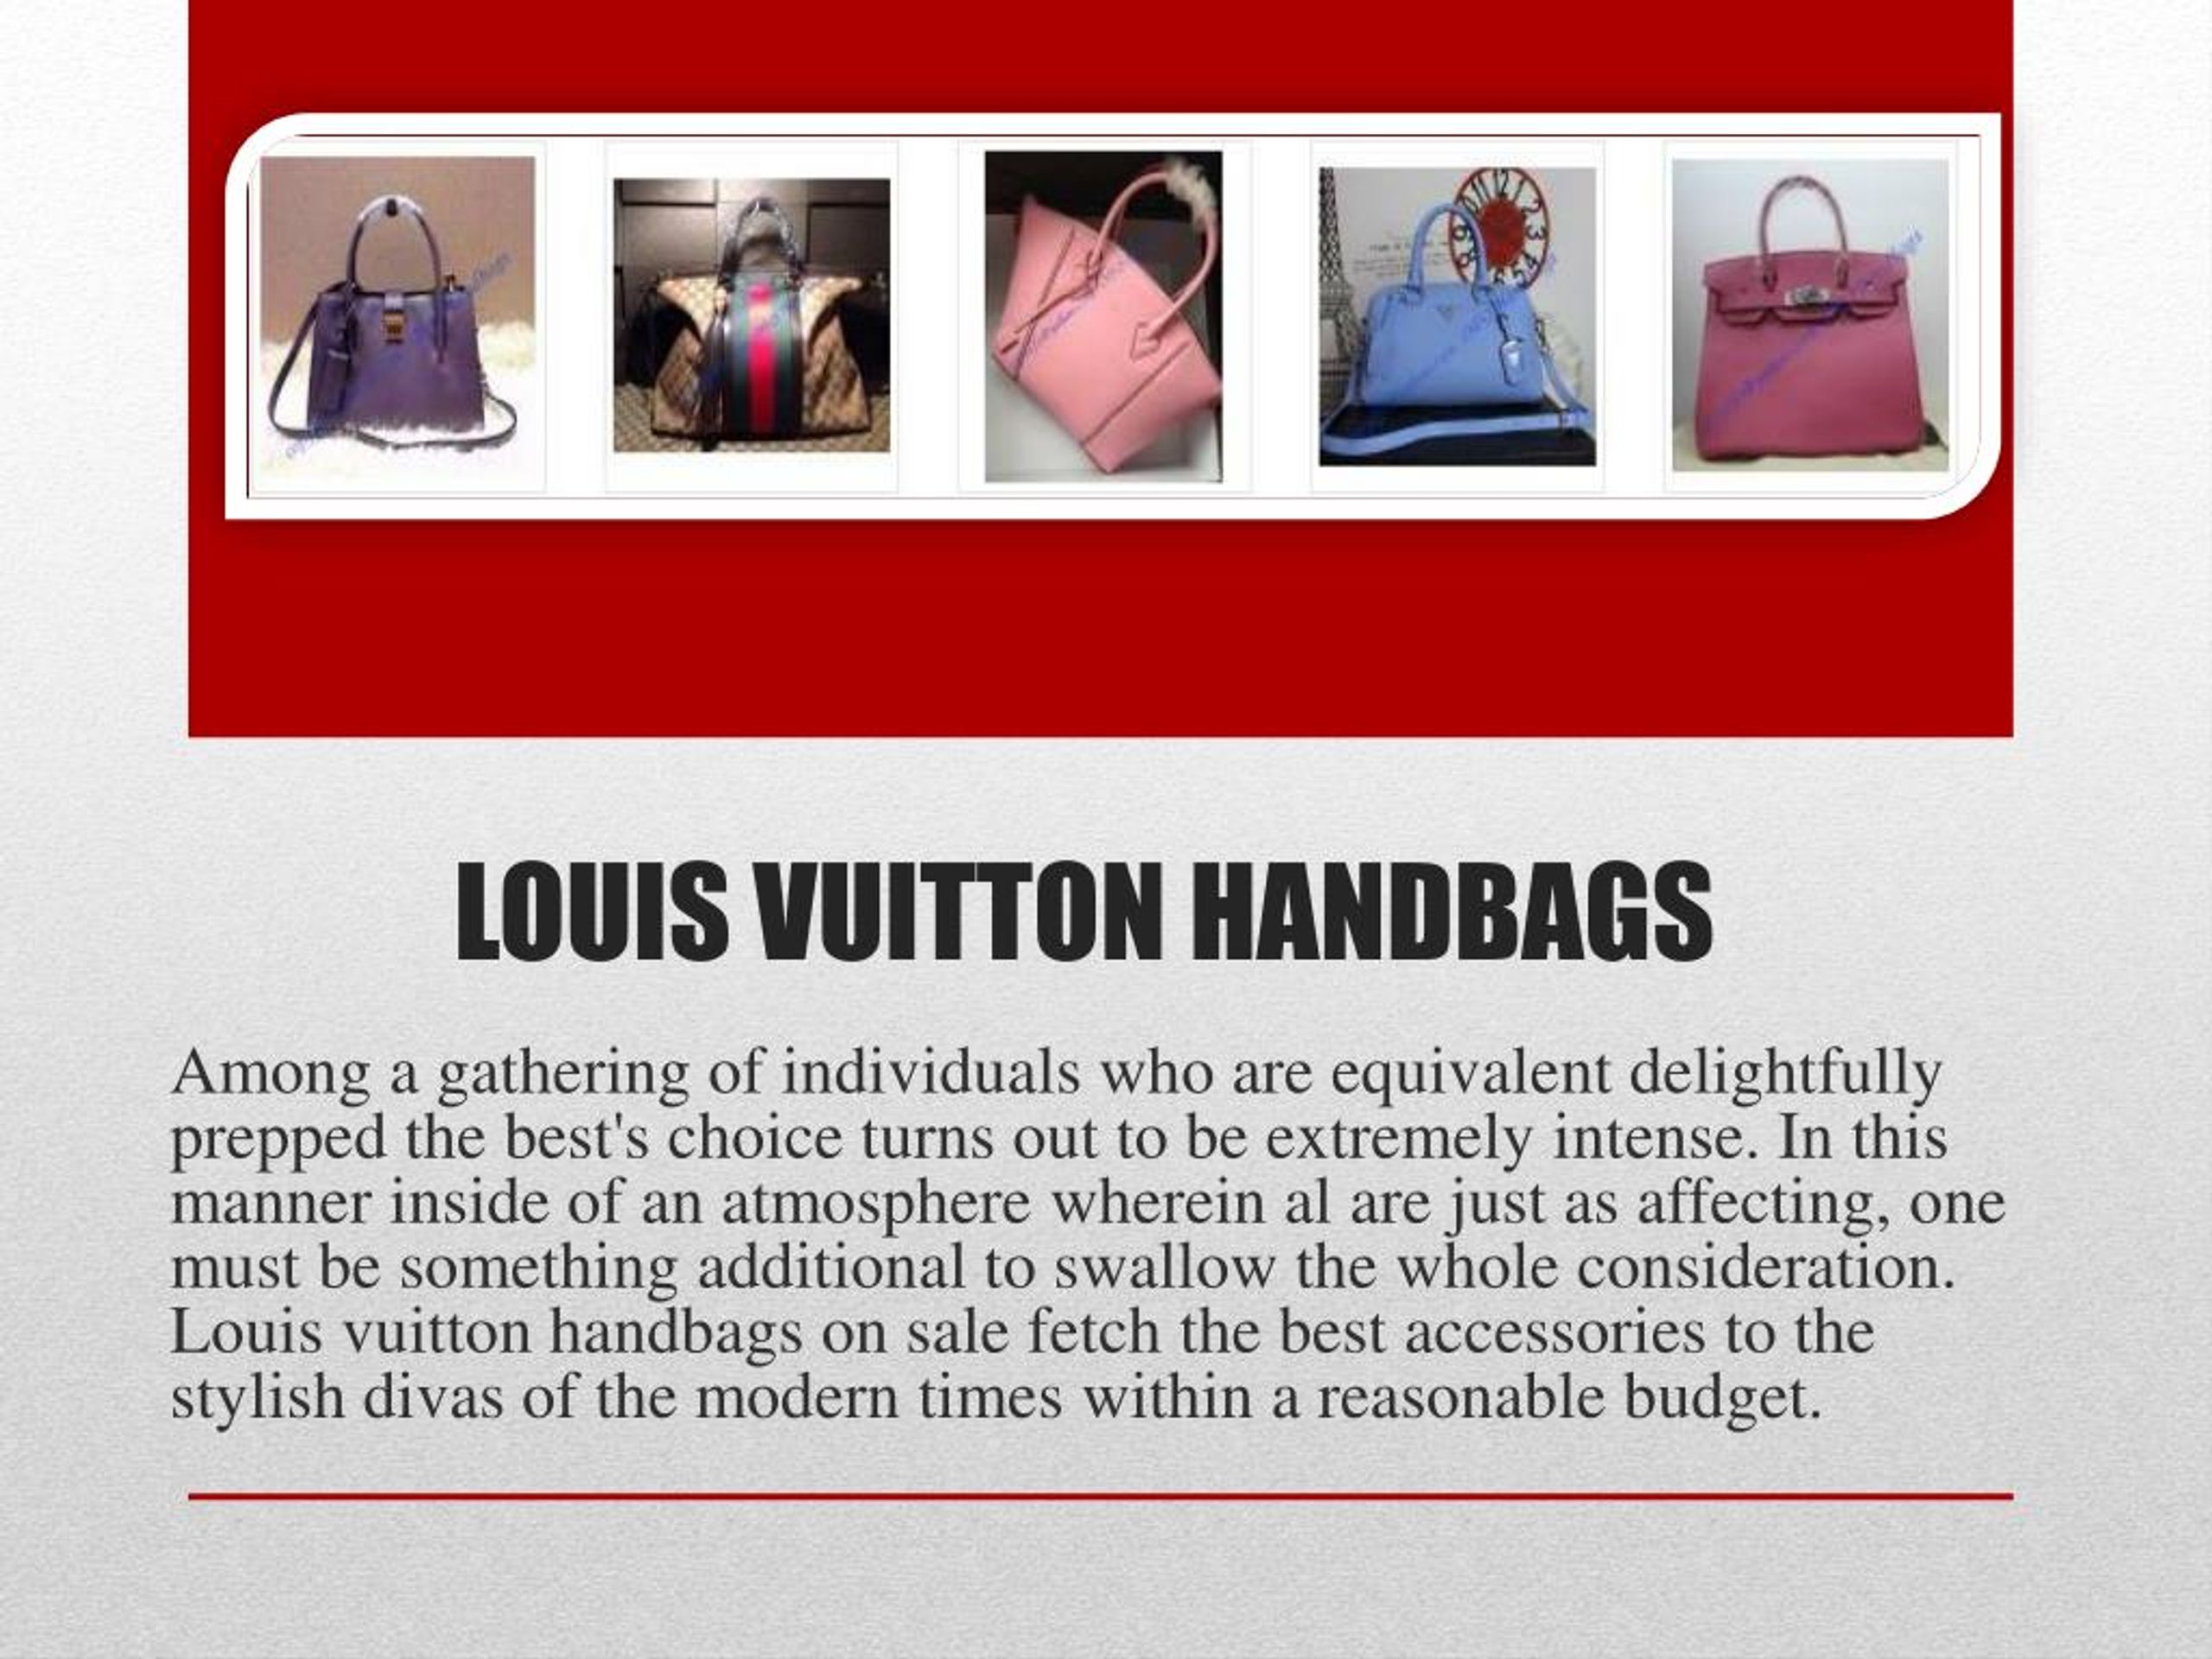 PPT - Luxtime.su/louis-vuitton-handbags PowerPoint Presentation, free ...